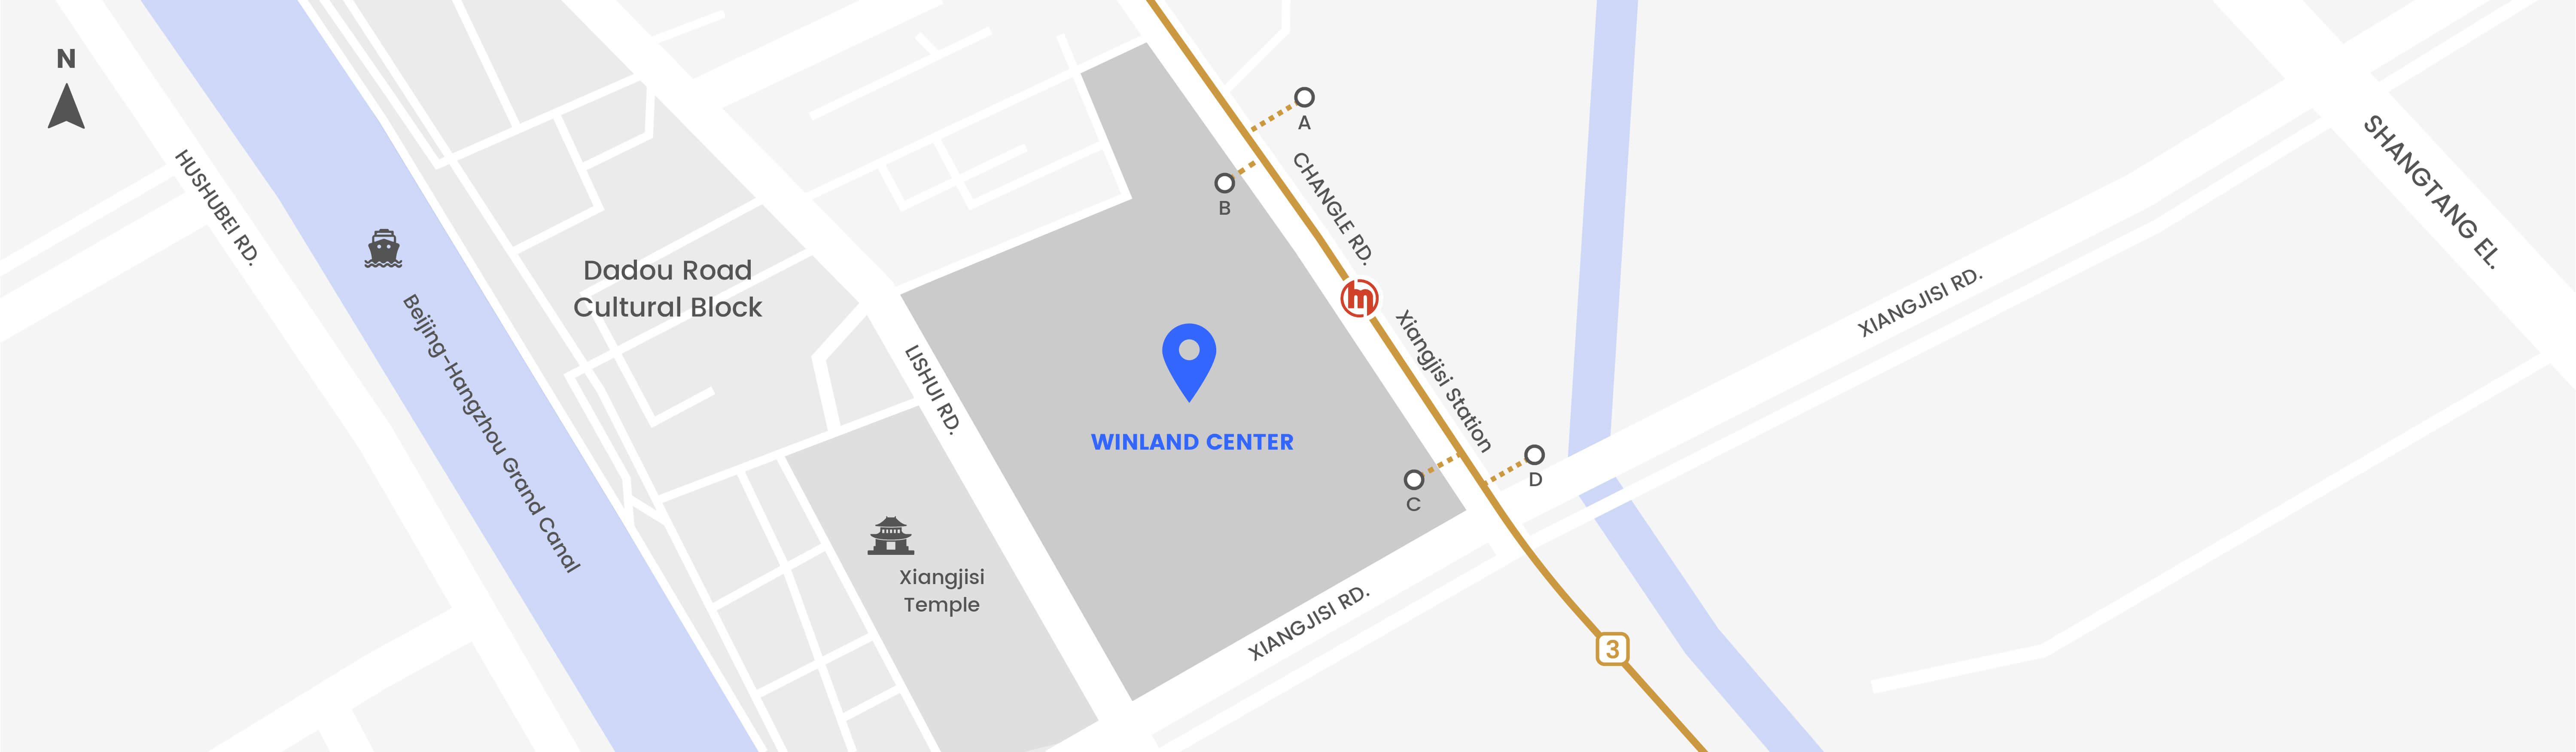 Address of Hangzhou Winland Center